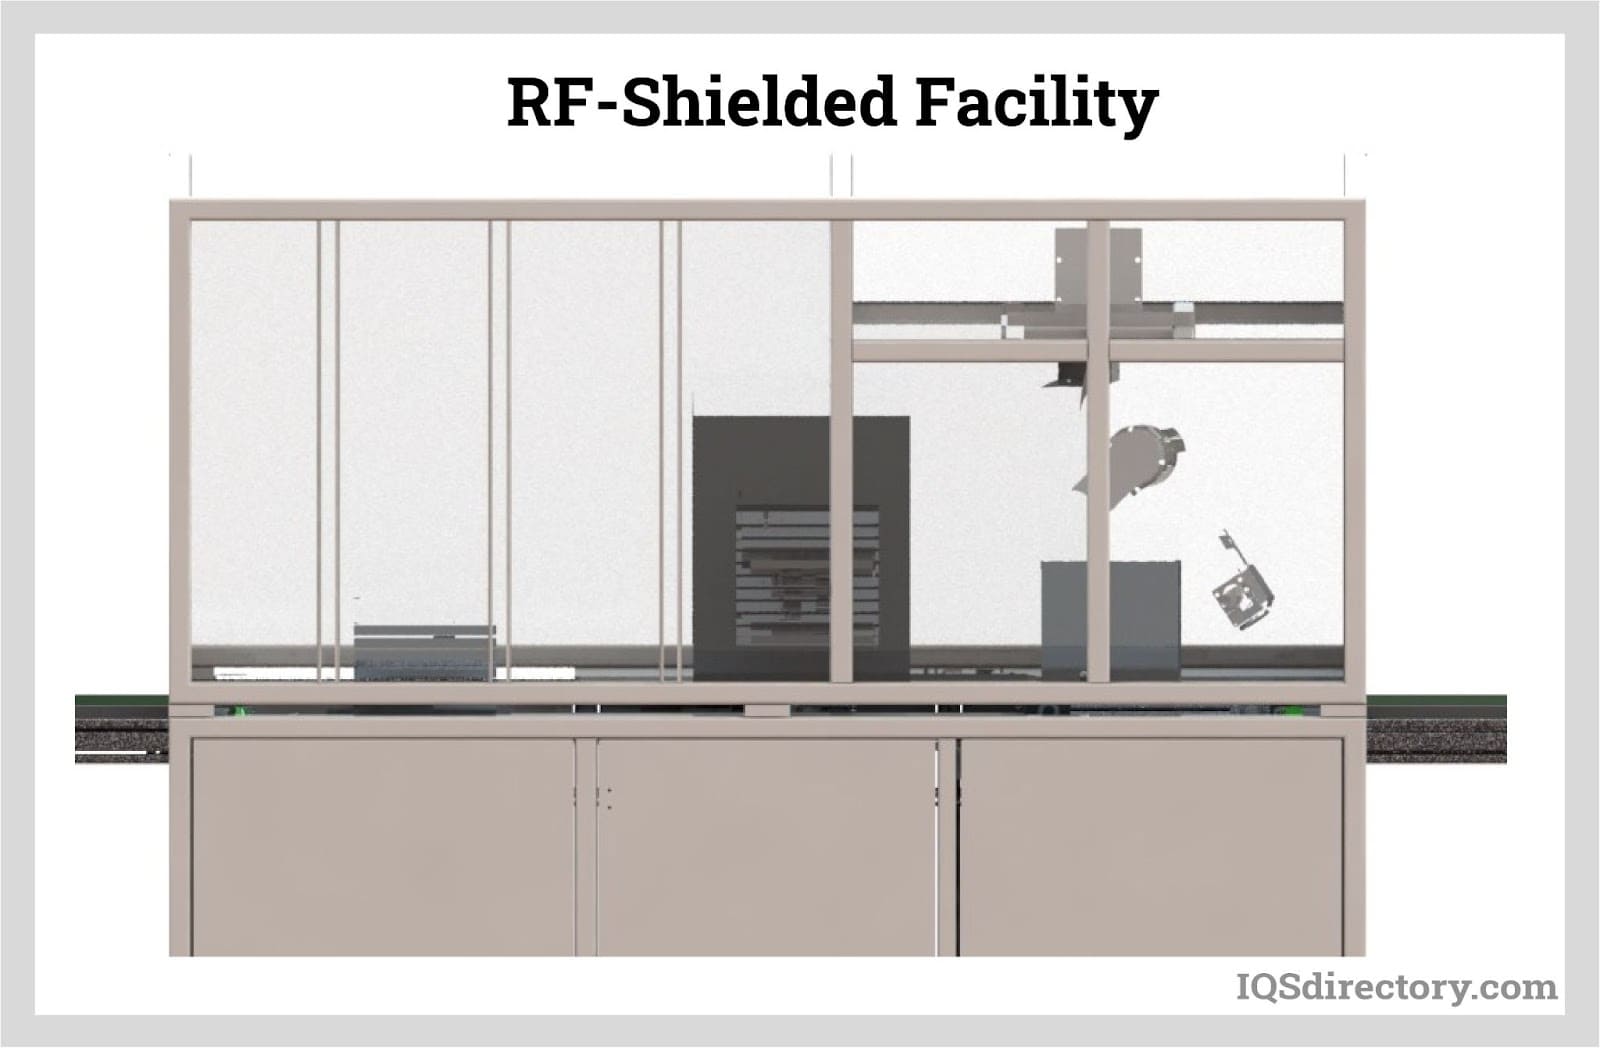 ”RF-Shielded